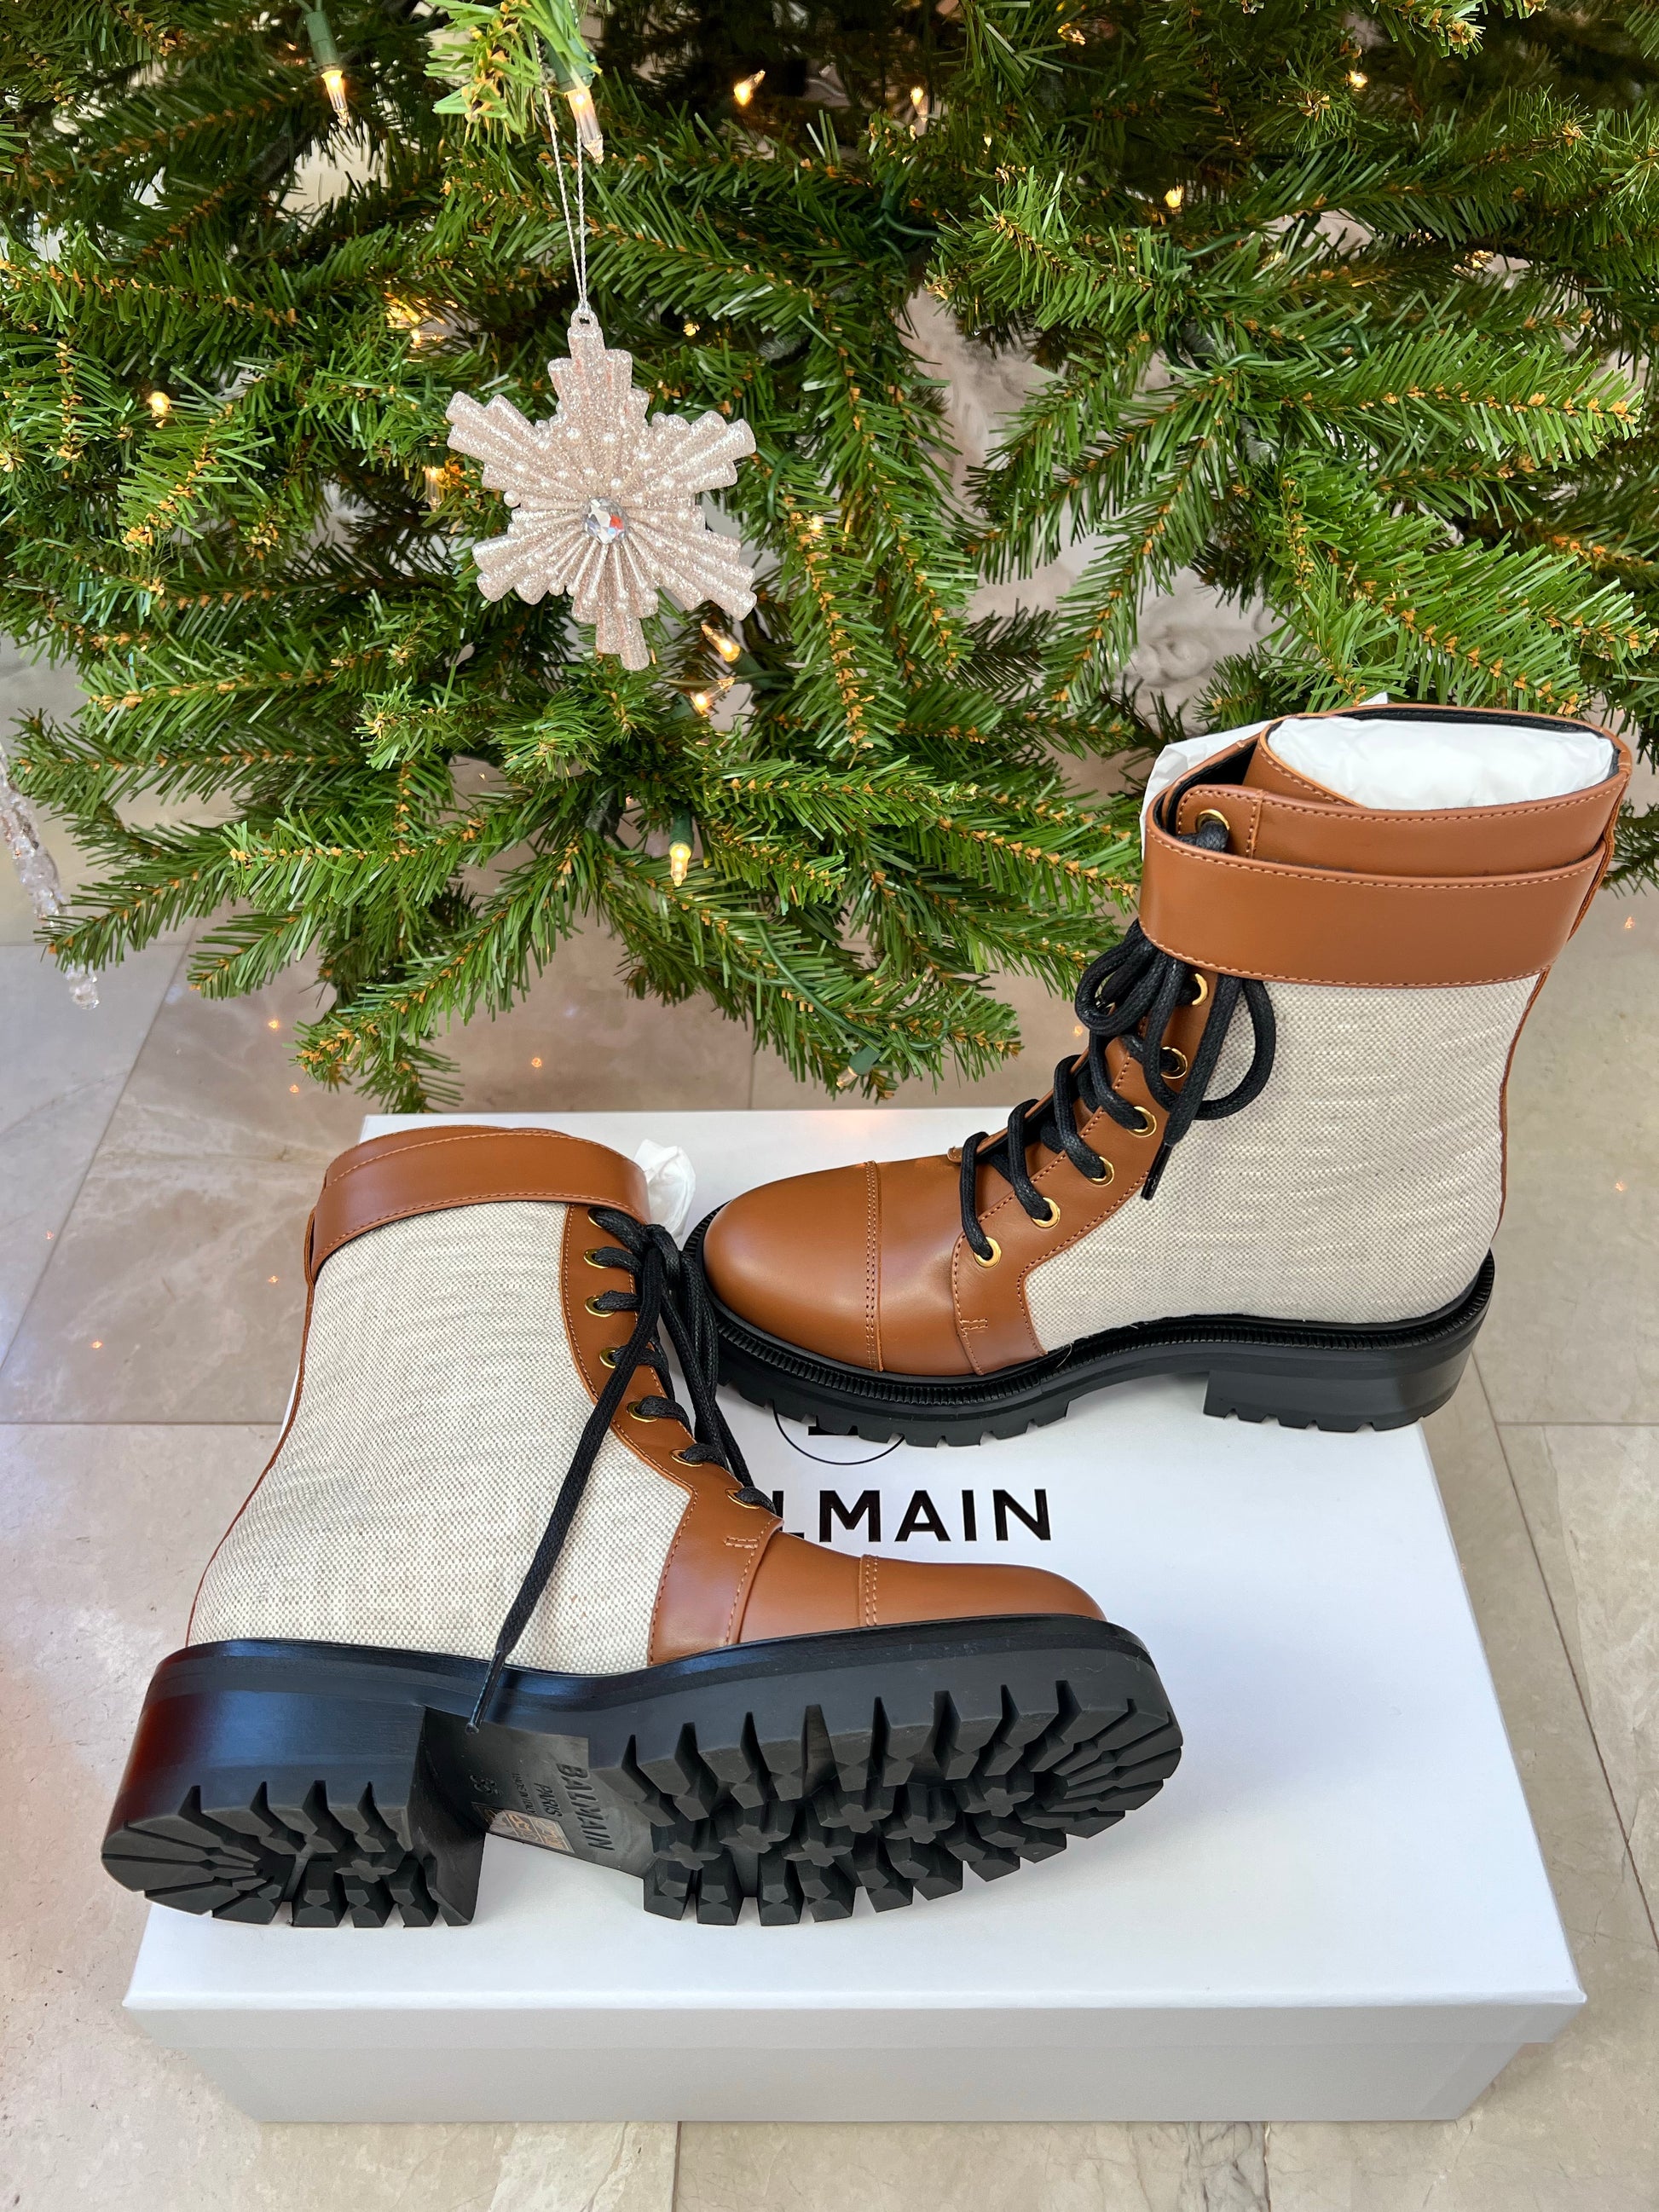 Balmain Romy Ranger Monogram Ankle Boots - Farfetch